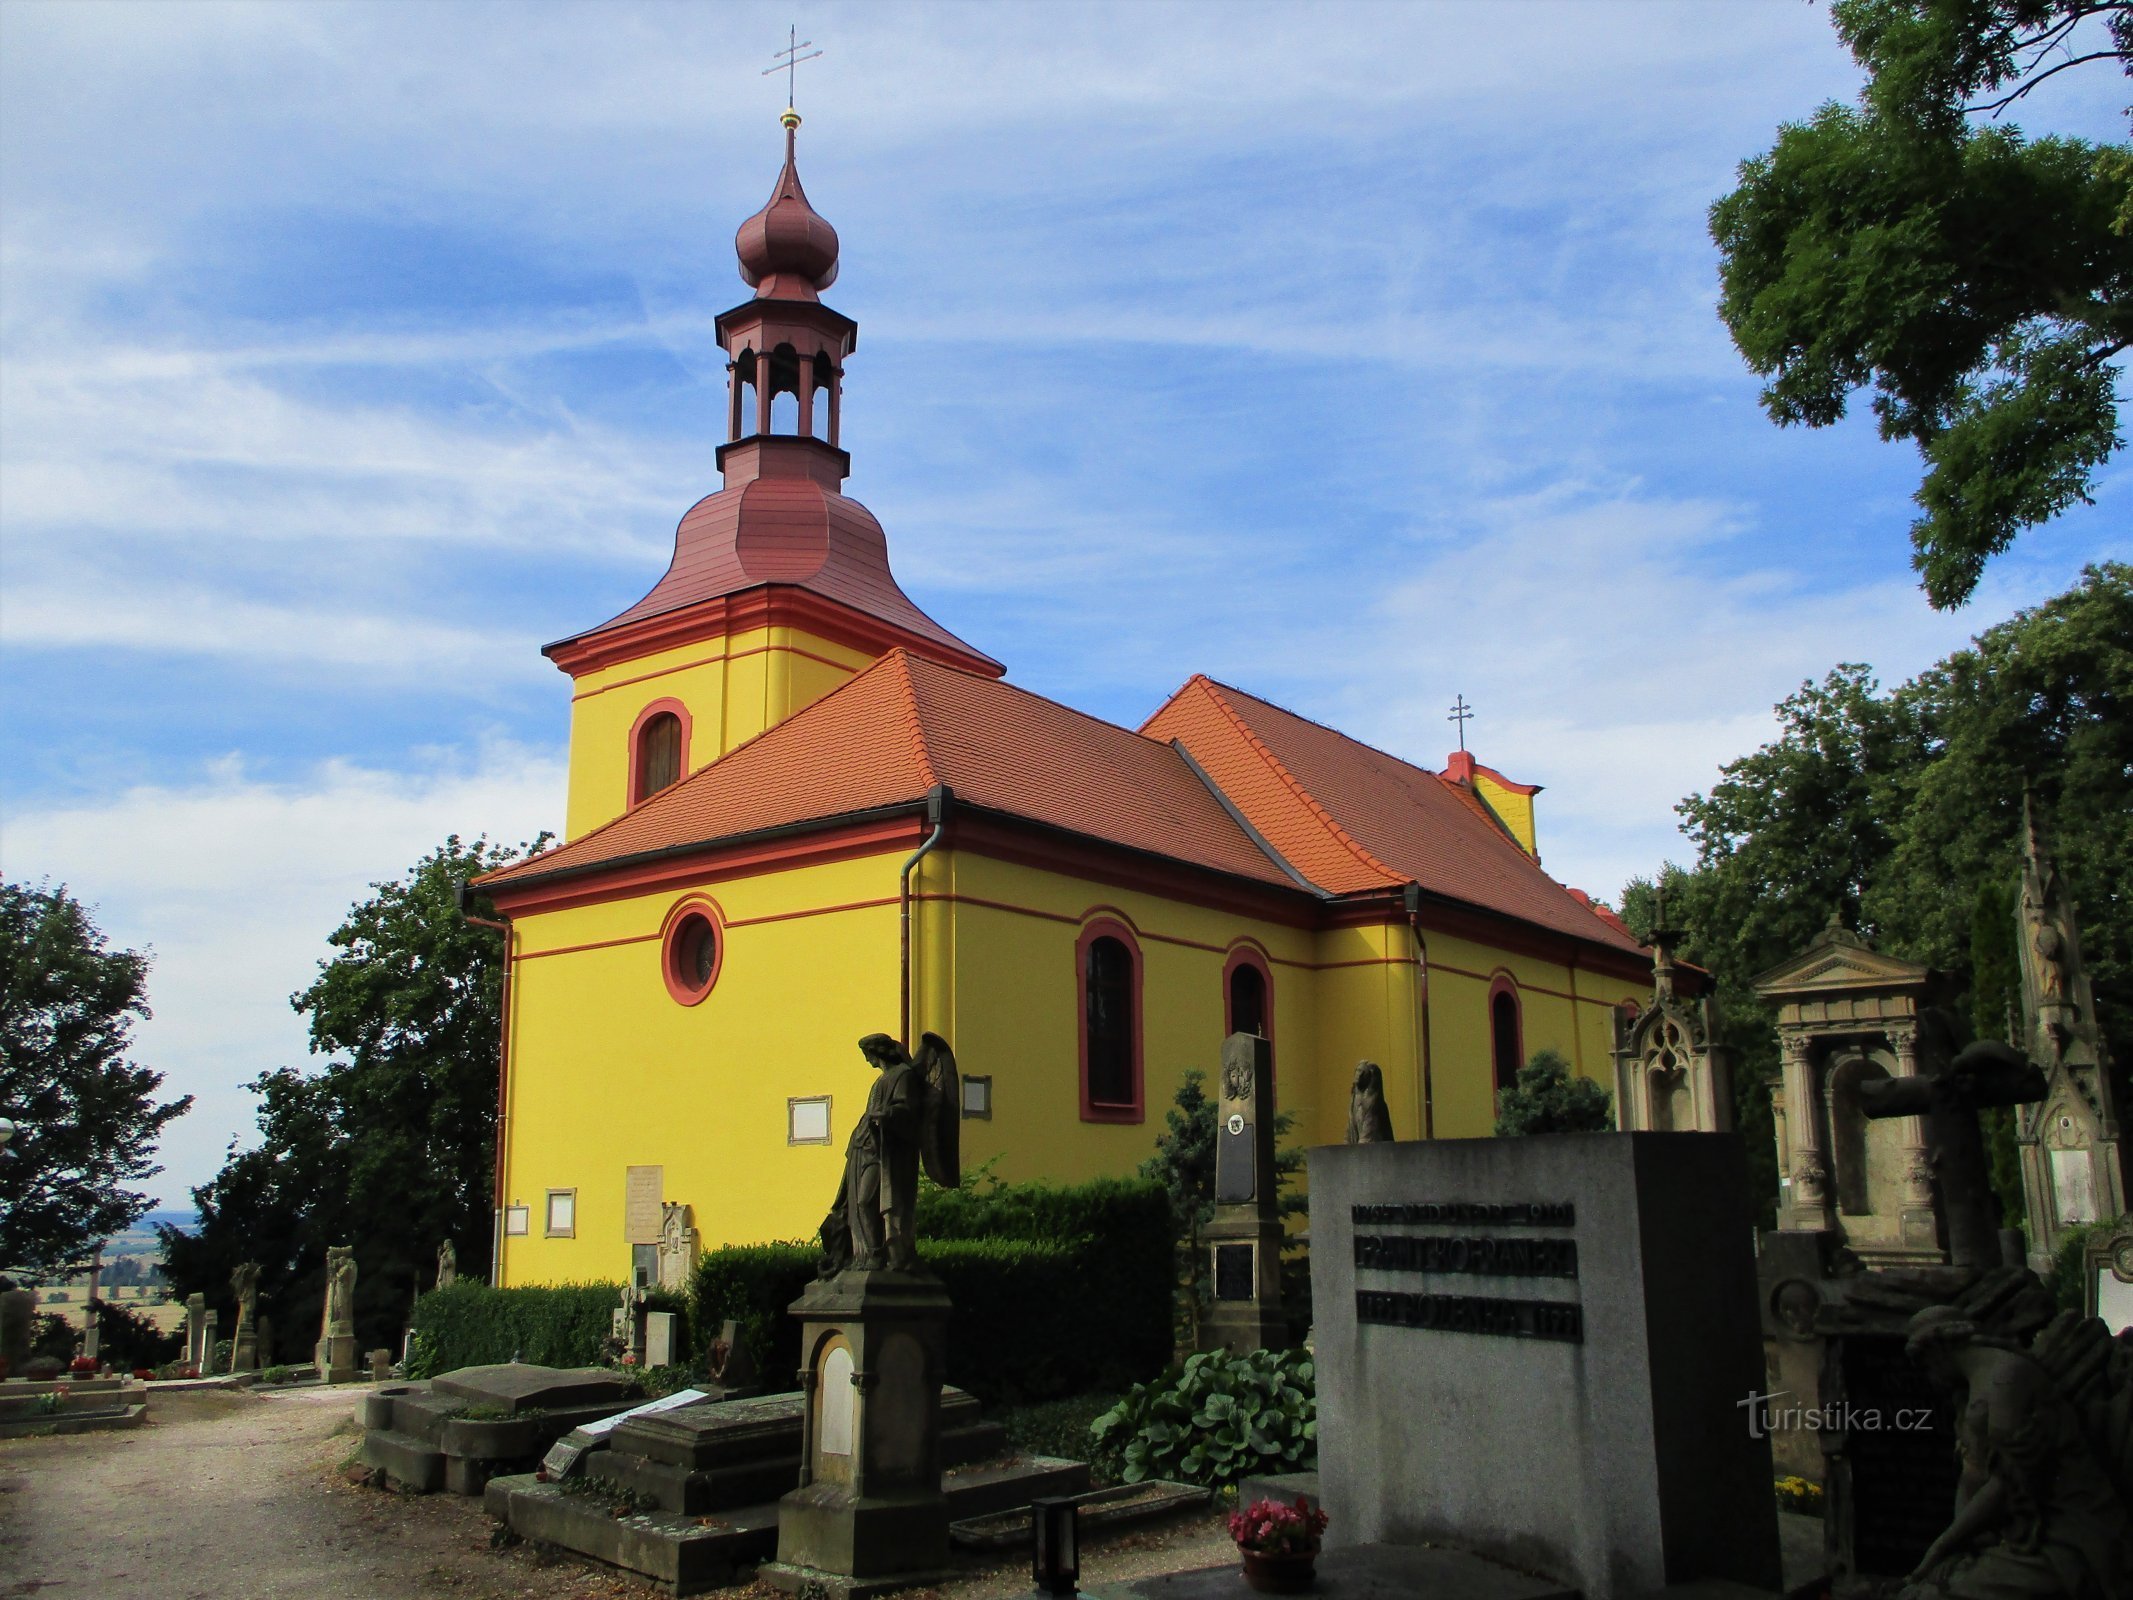 Cimitero Chiesa di S. Gothard, vescovo (Hořice, 26.7.2020/XNUMX/XNUMX)